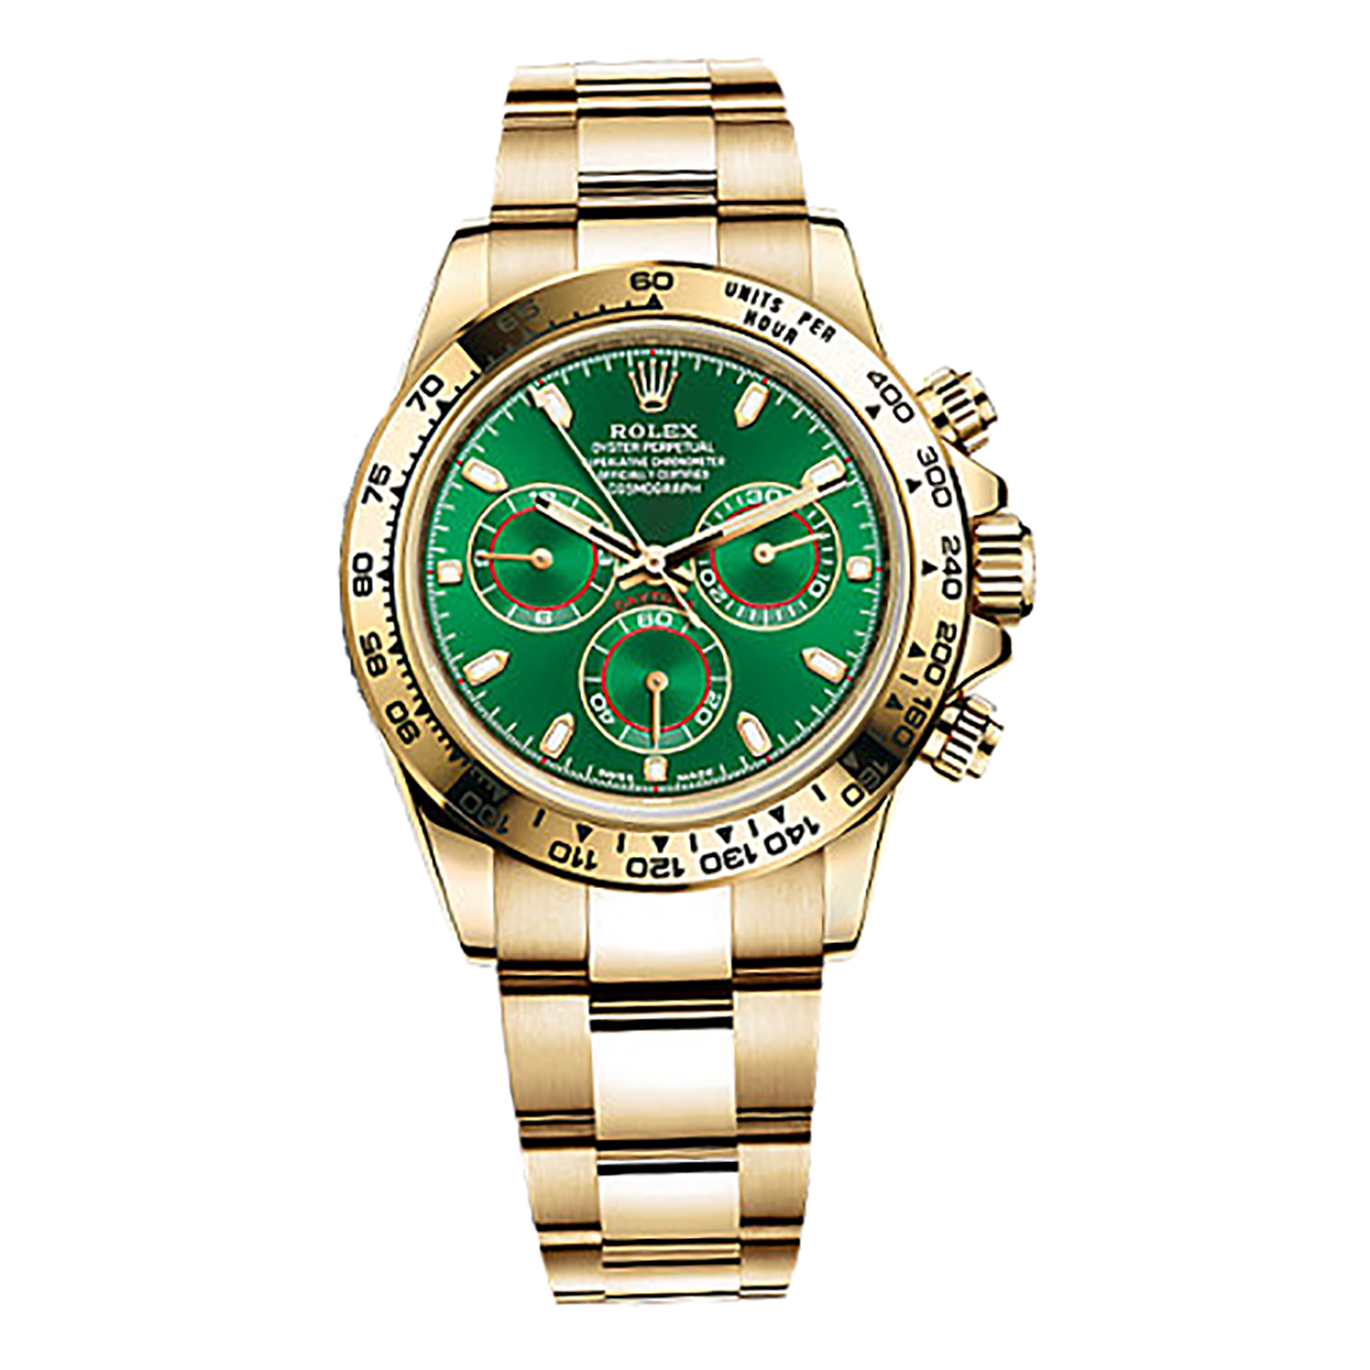 Cosmograph Daytona 116508 Gold Watch (Green)